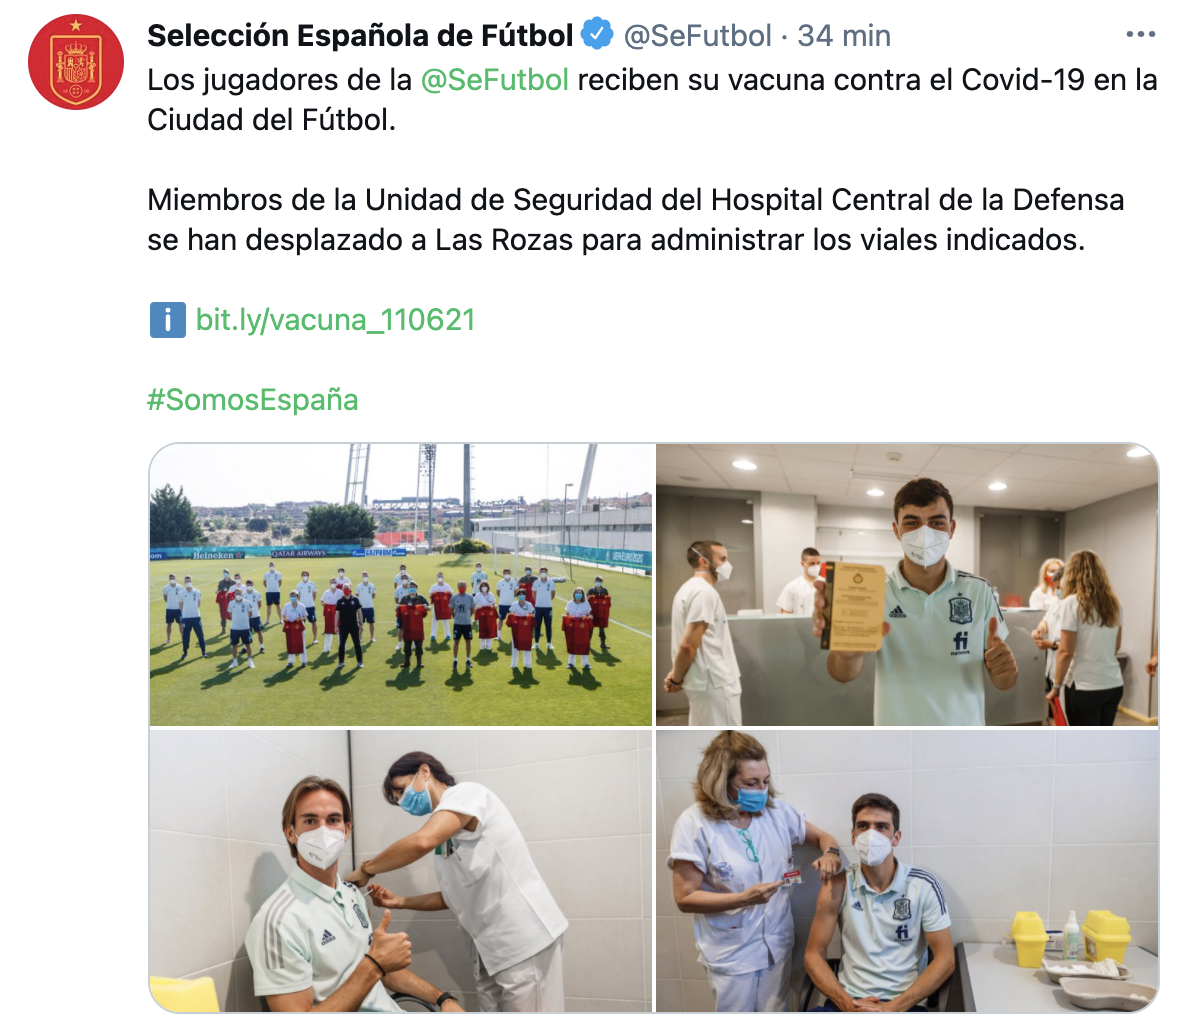 Vacunacion seleccion espanola futbol TUIT